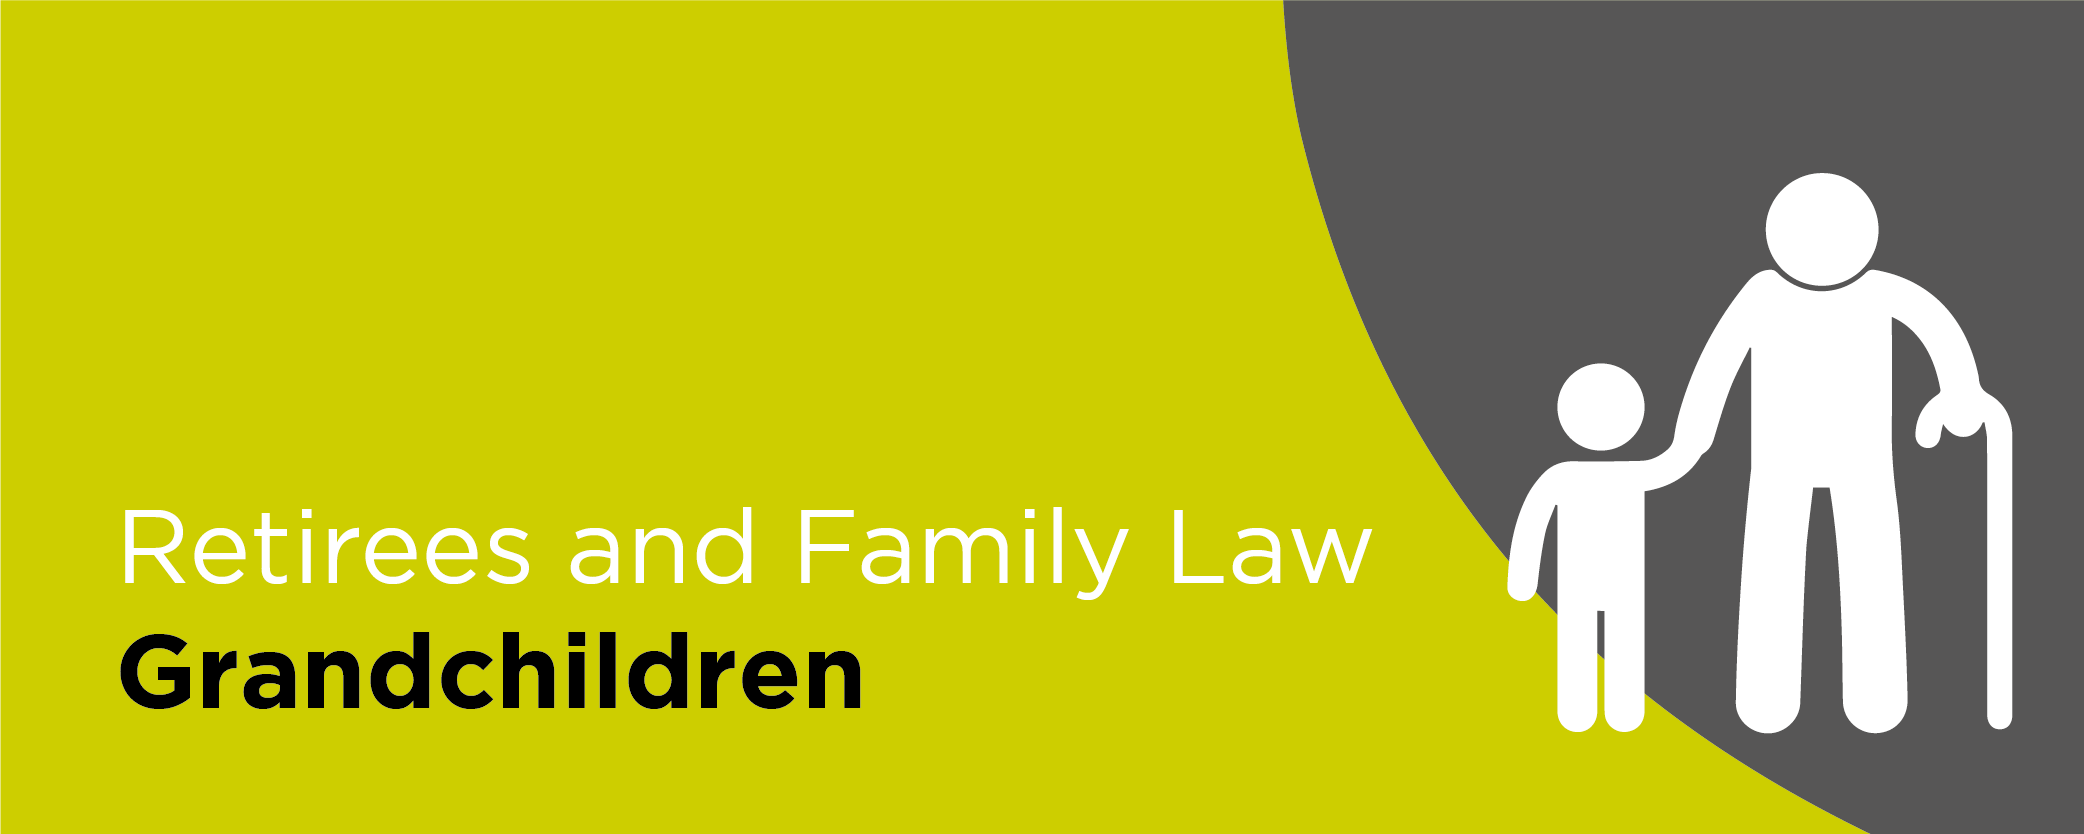 Retirees and Family Law: Grandchildren